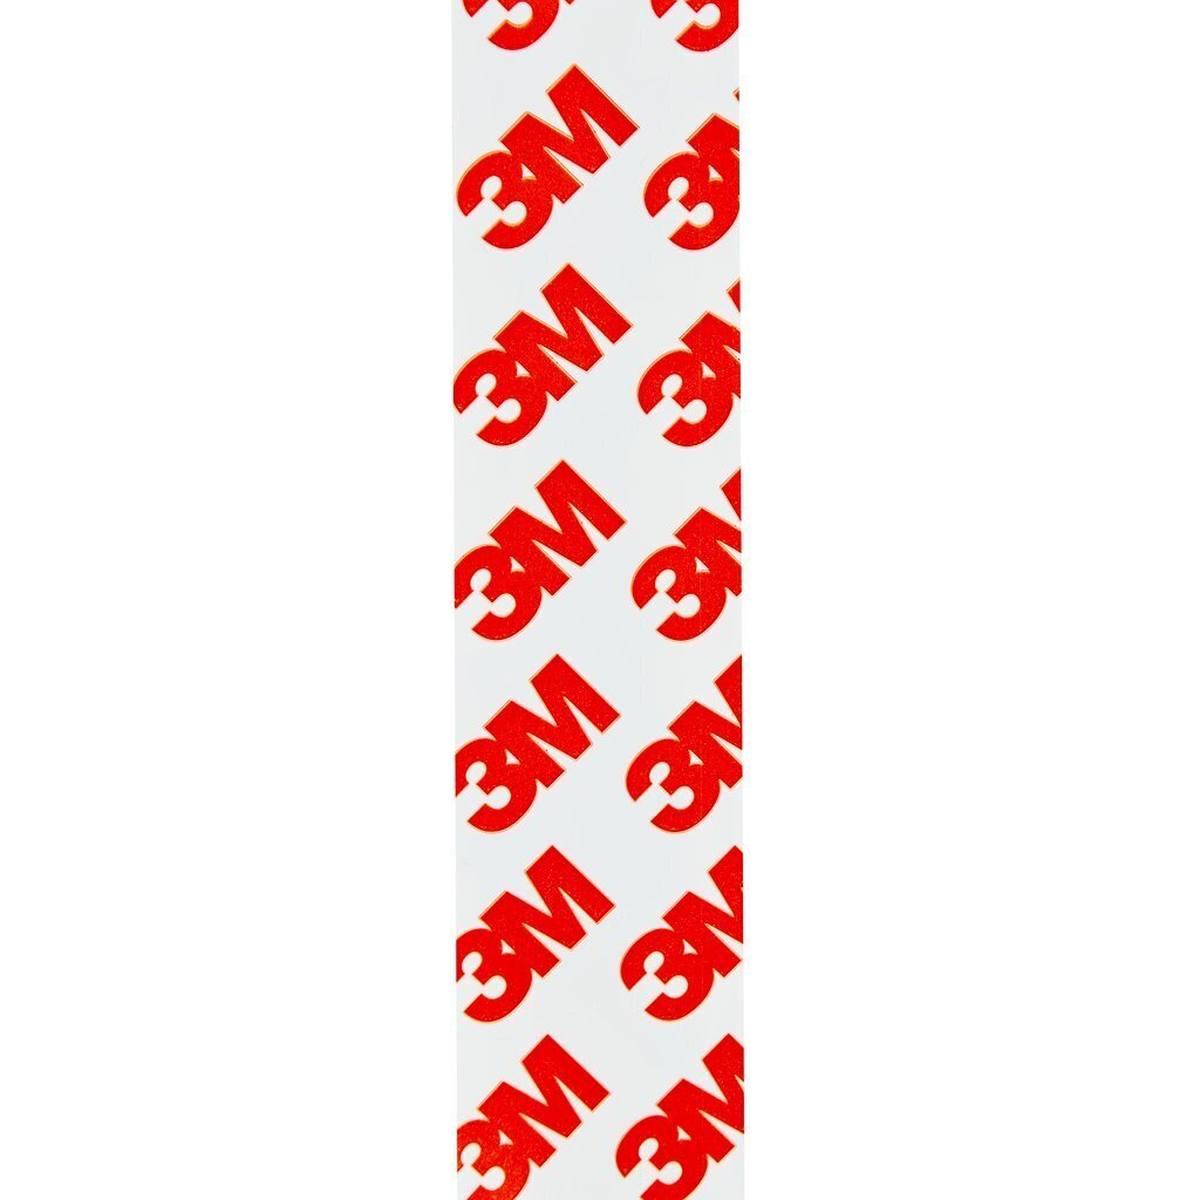 3M Dubbelzijdig plakband met polyester drager GPT-020F, transparant, 25 mm x 50 m, 0,202 mm